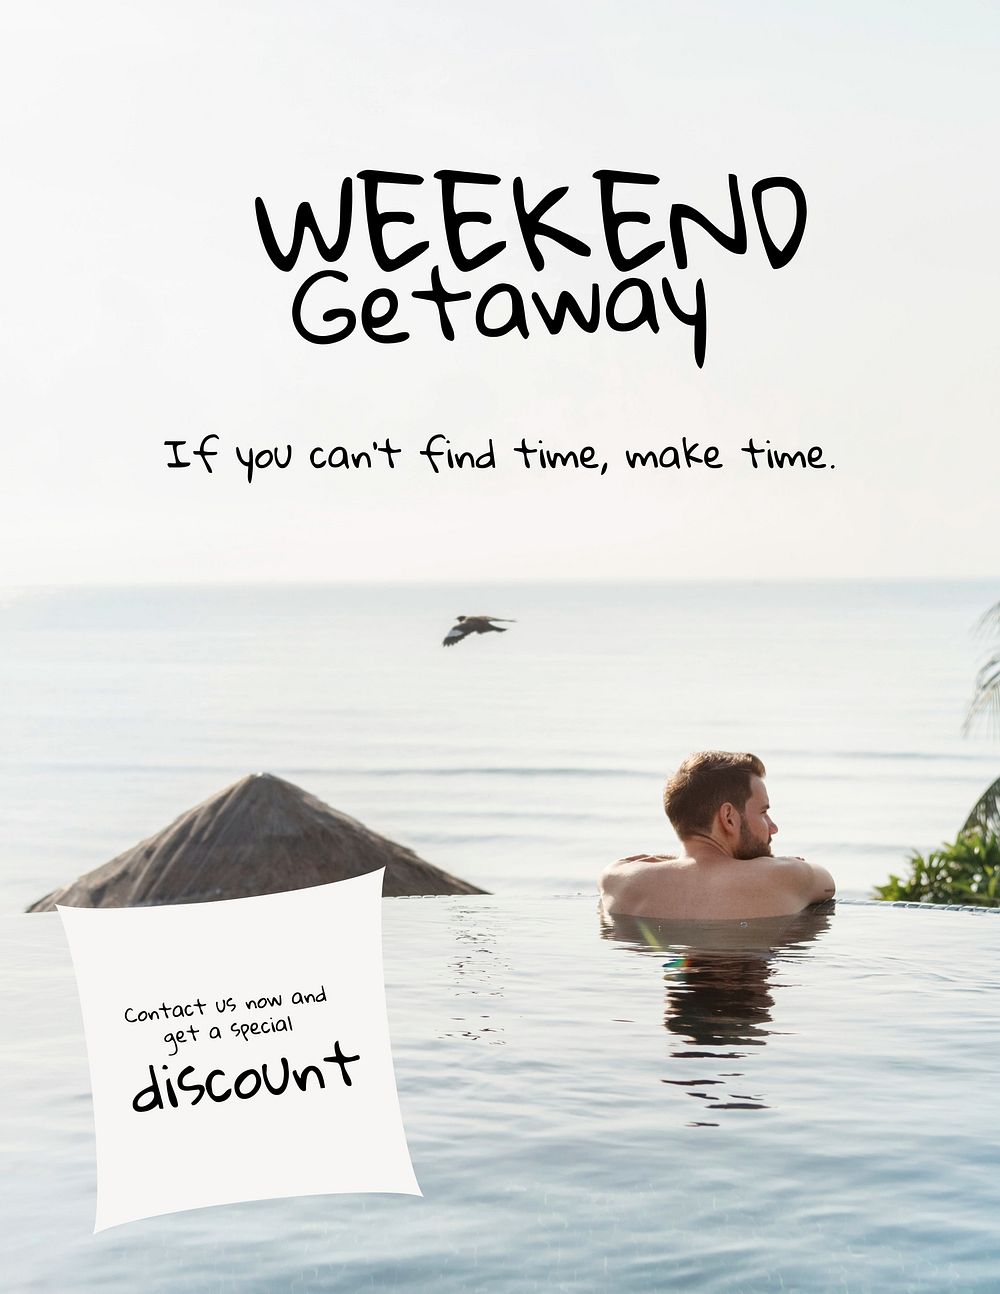 Weekend getaway flyer template, travel design